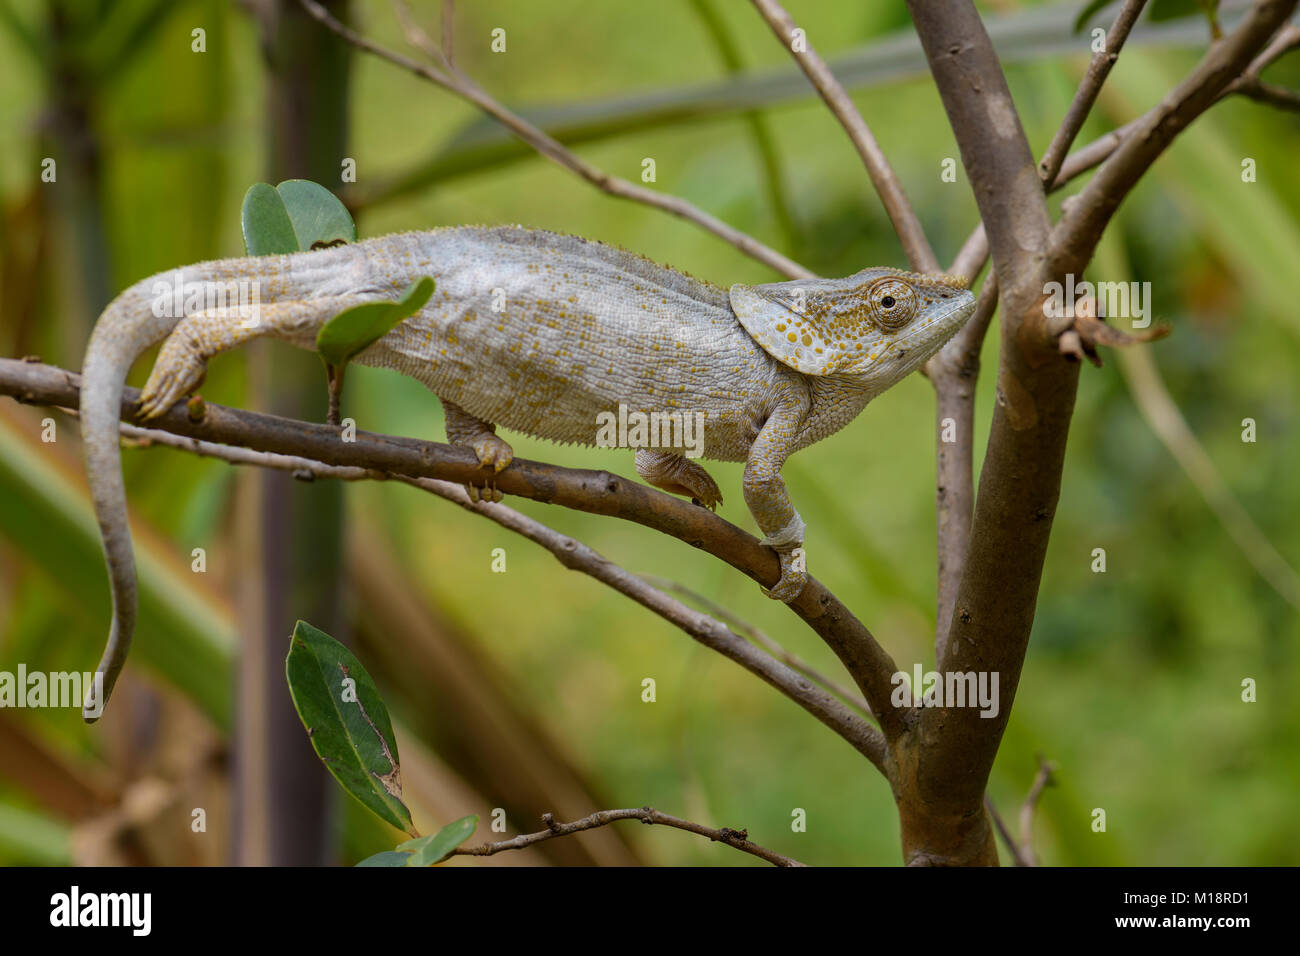 Kurze-horned Chameleon - Calumma brevicorne, Madagaskar Regenwald. Schöne farbige Eidechse. Elephant ear. Stockfoto